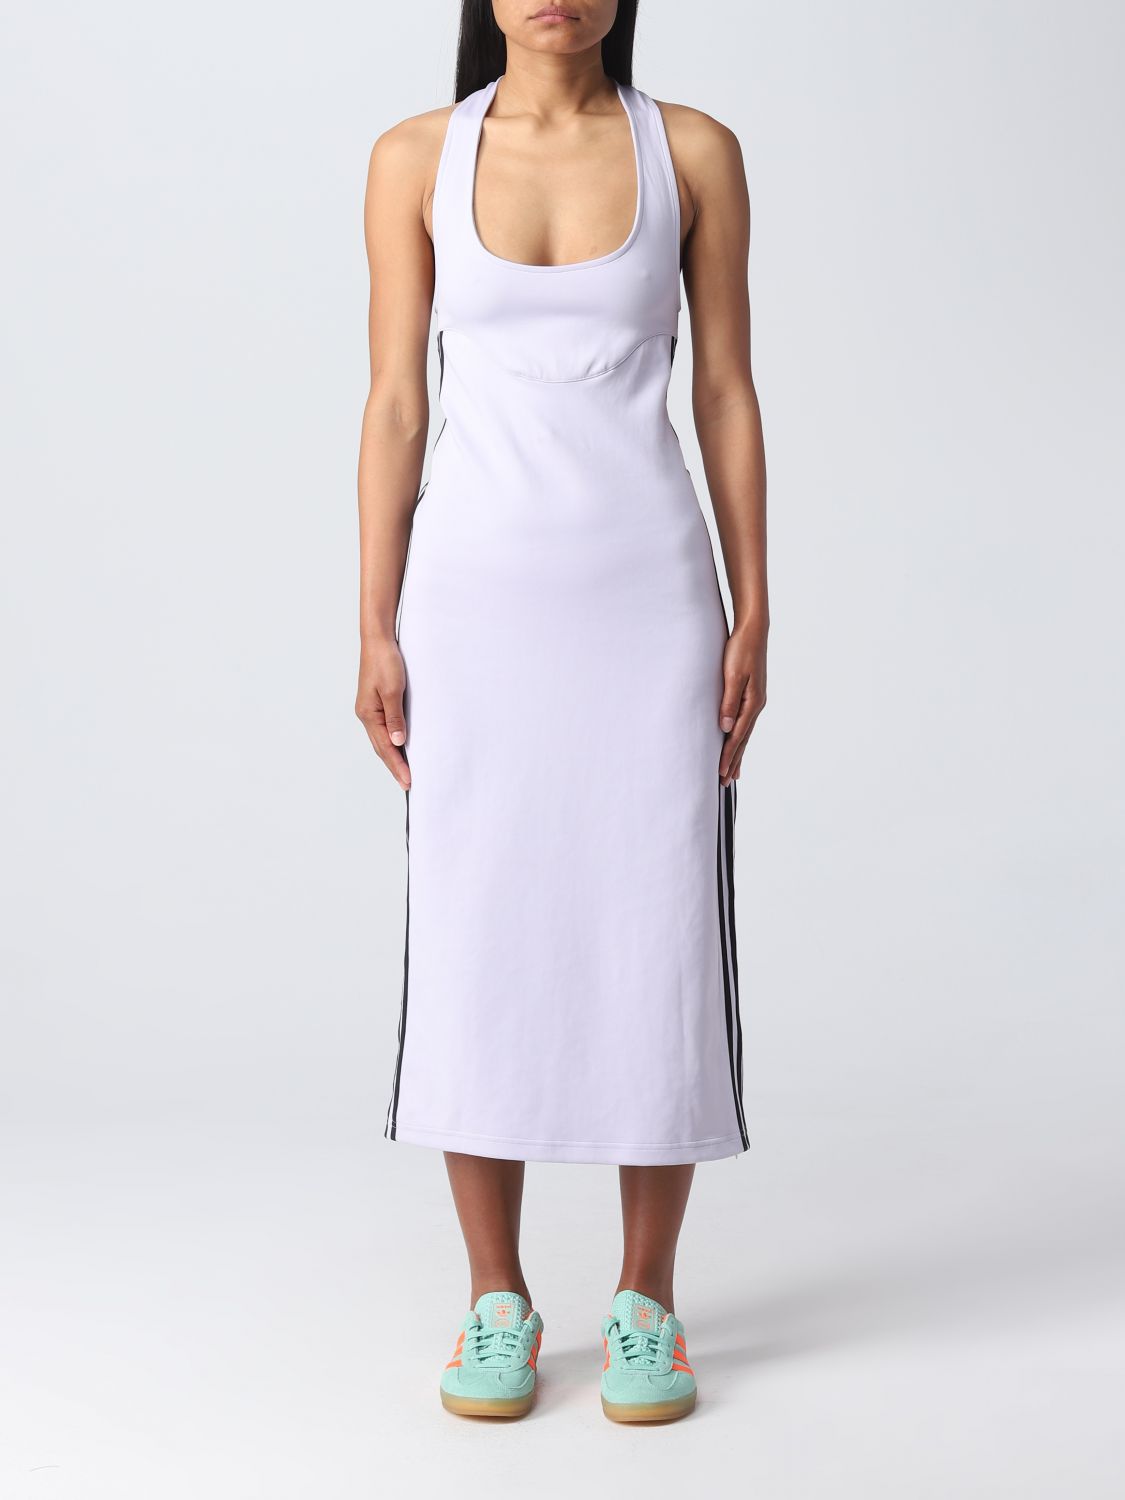 Losjes Milieuactivist uitglijden ADIDAS ORIGINALS: dress for woman - Violet | Adidas Originals dress IC3589  online on GIGLIO.COM